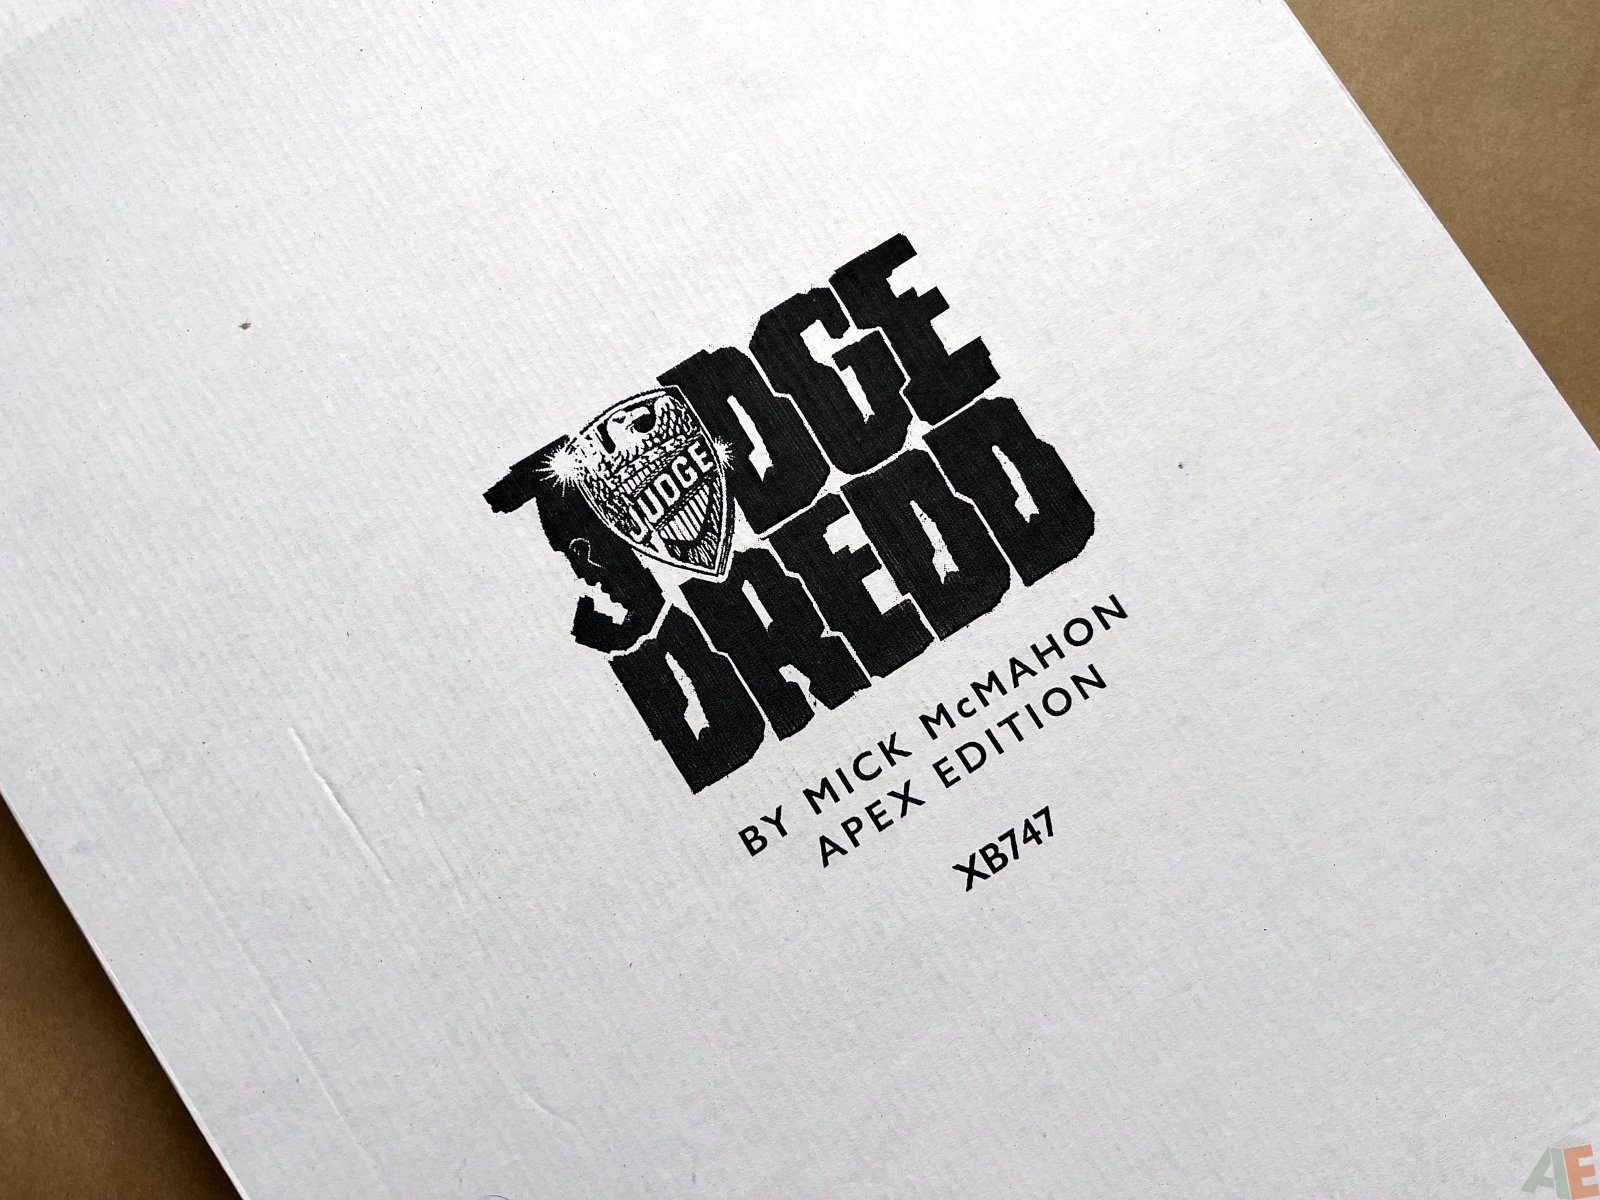 Judge Dredd by Mick McMahon Apex Edition interior 1